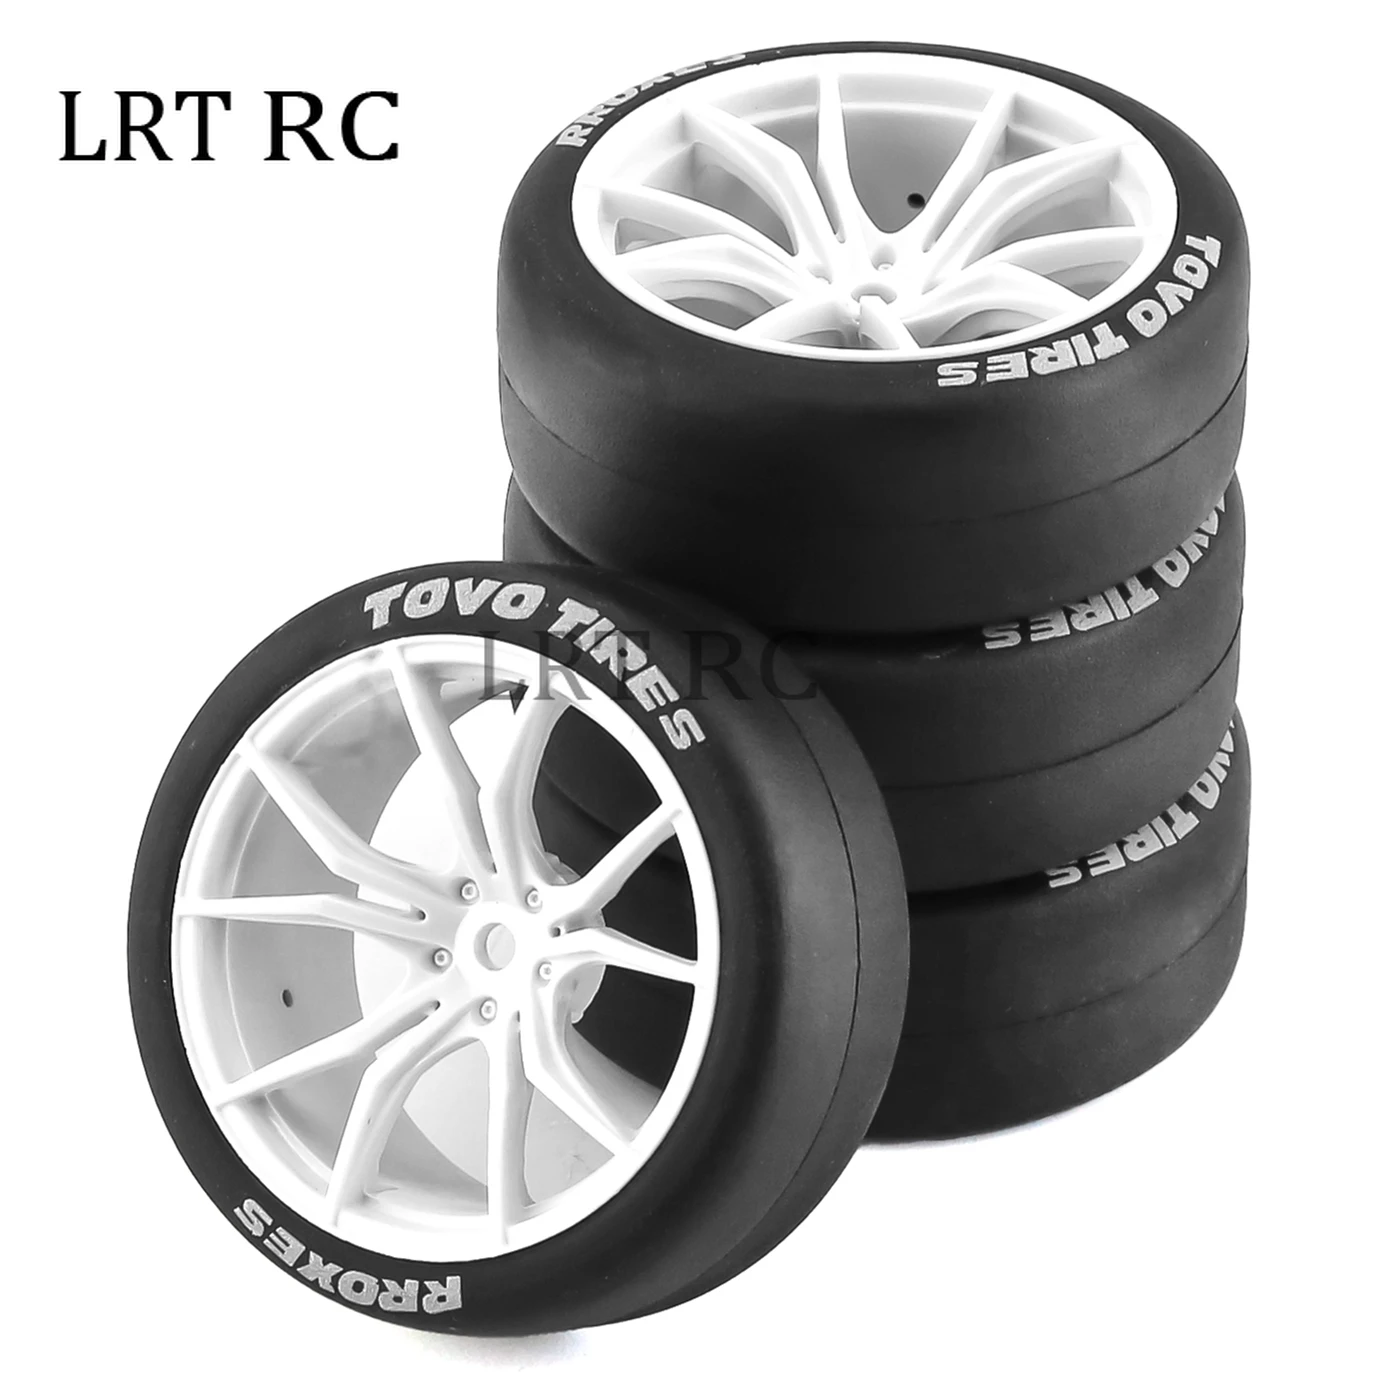 

4pcs 65mm Hard Drift Tire 1/10 RC Drift Car On Road Touring Racing Car Tyre Wheel for Tamiya TT01 TT02 XV01 PTG-2 Kyosho HPI HSP